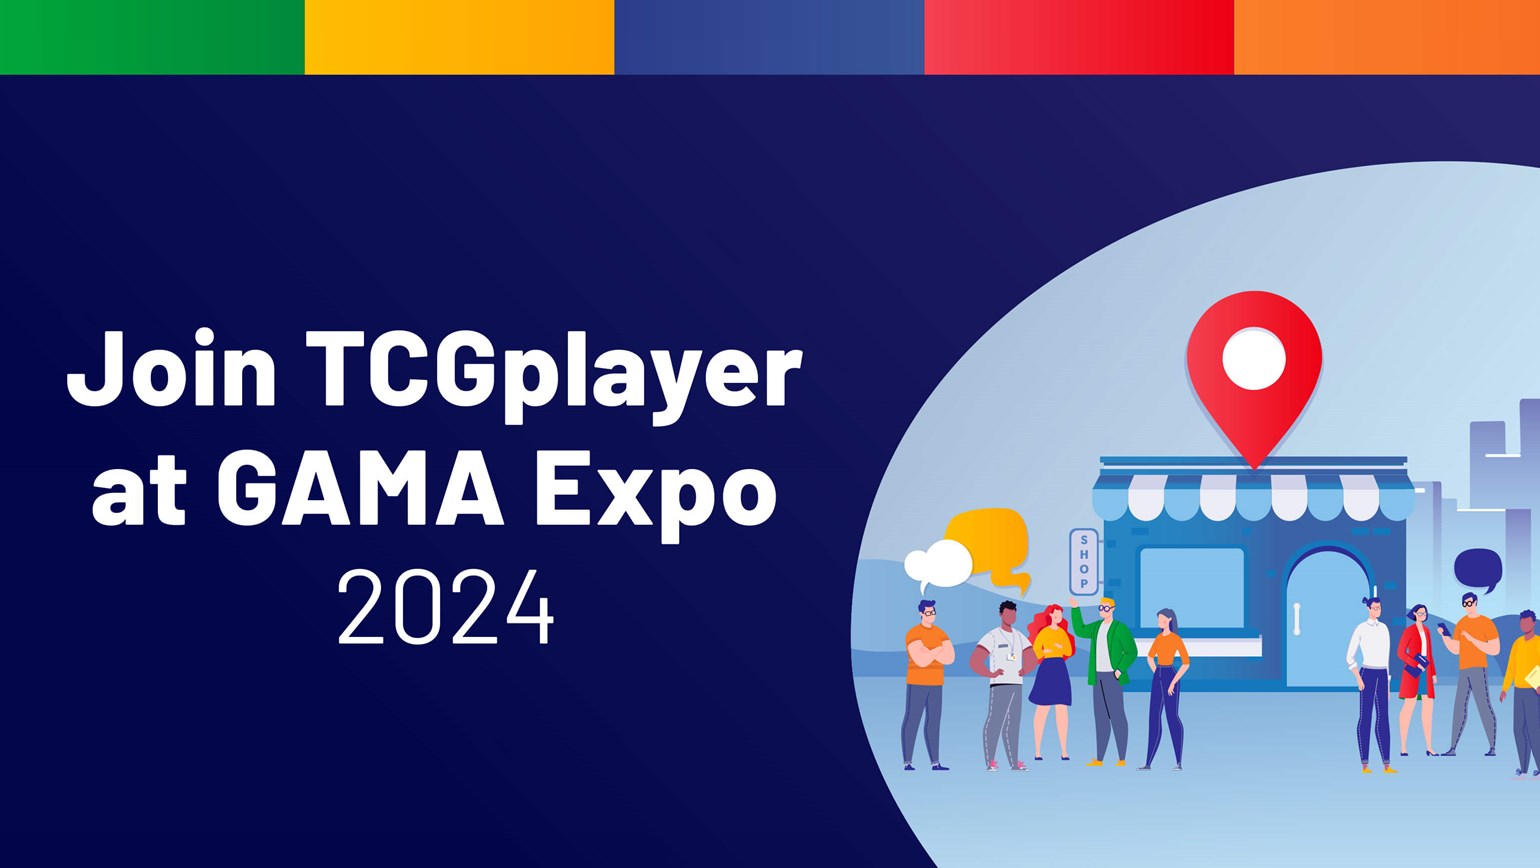 Join TCGplayer at GAMA Expo 2024